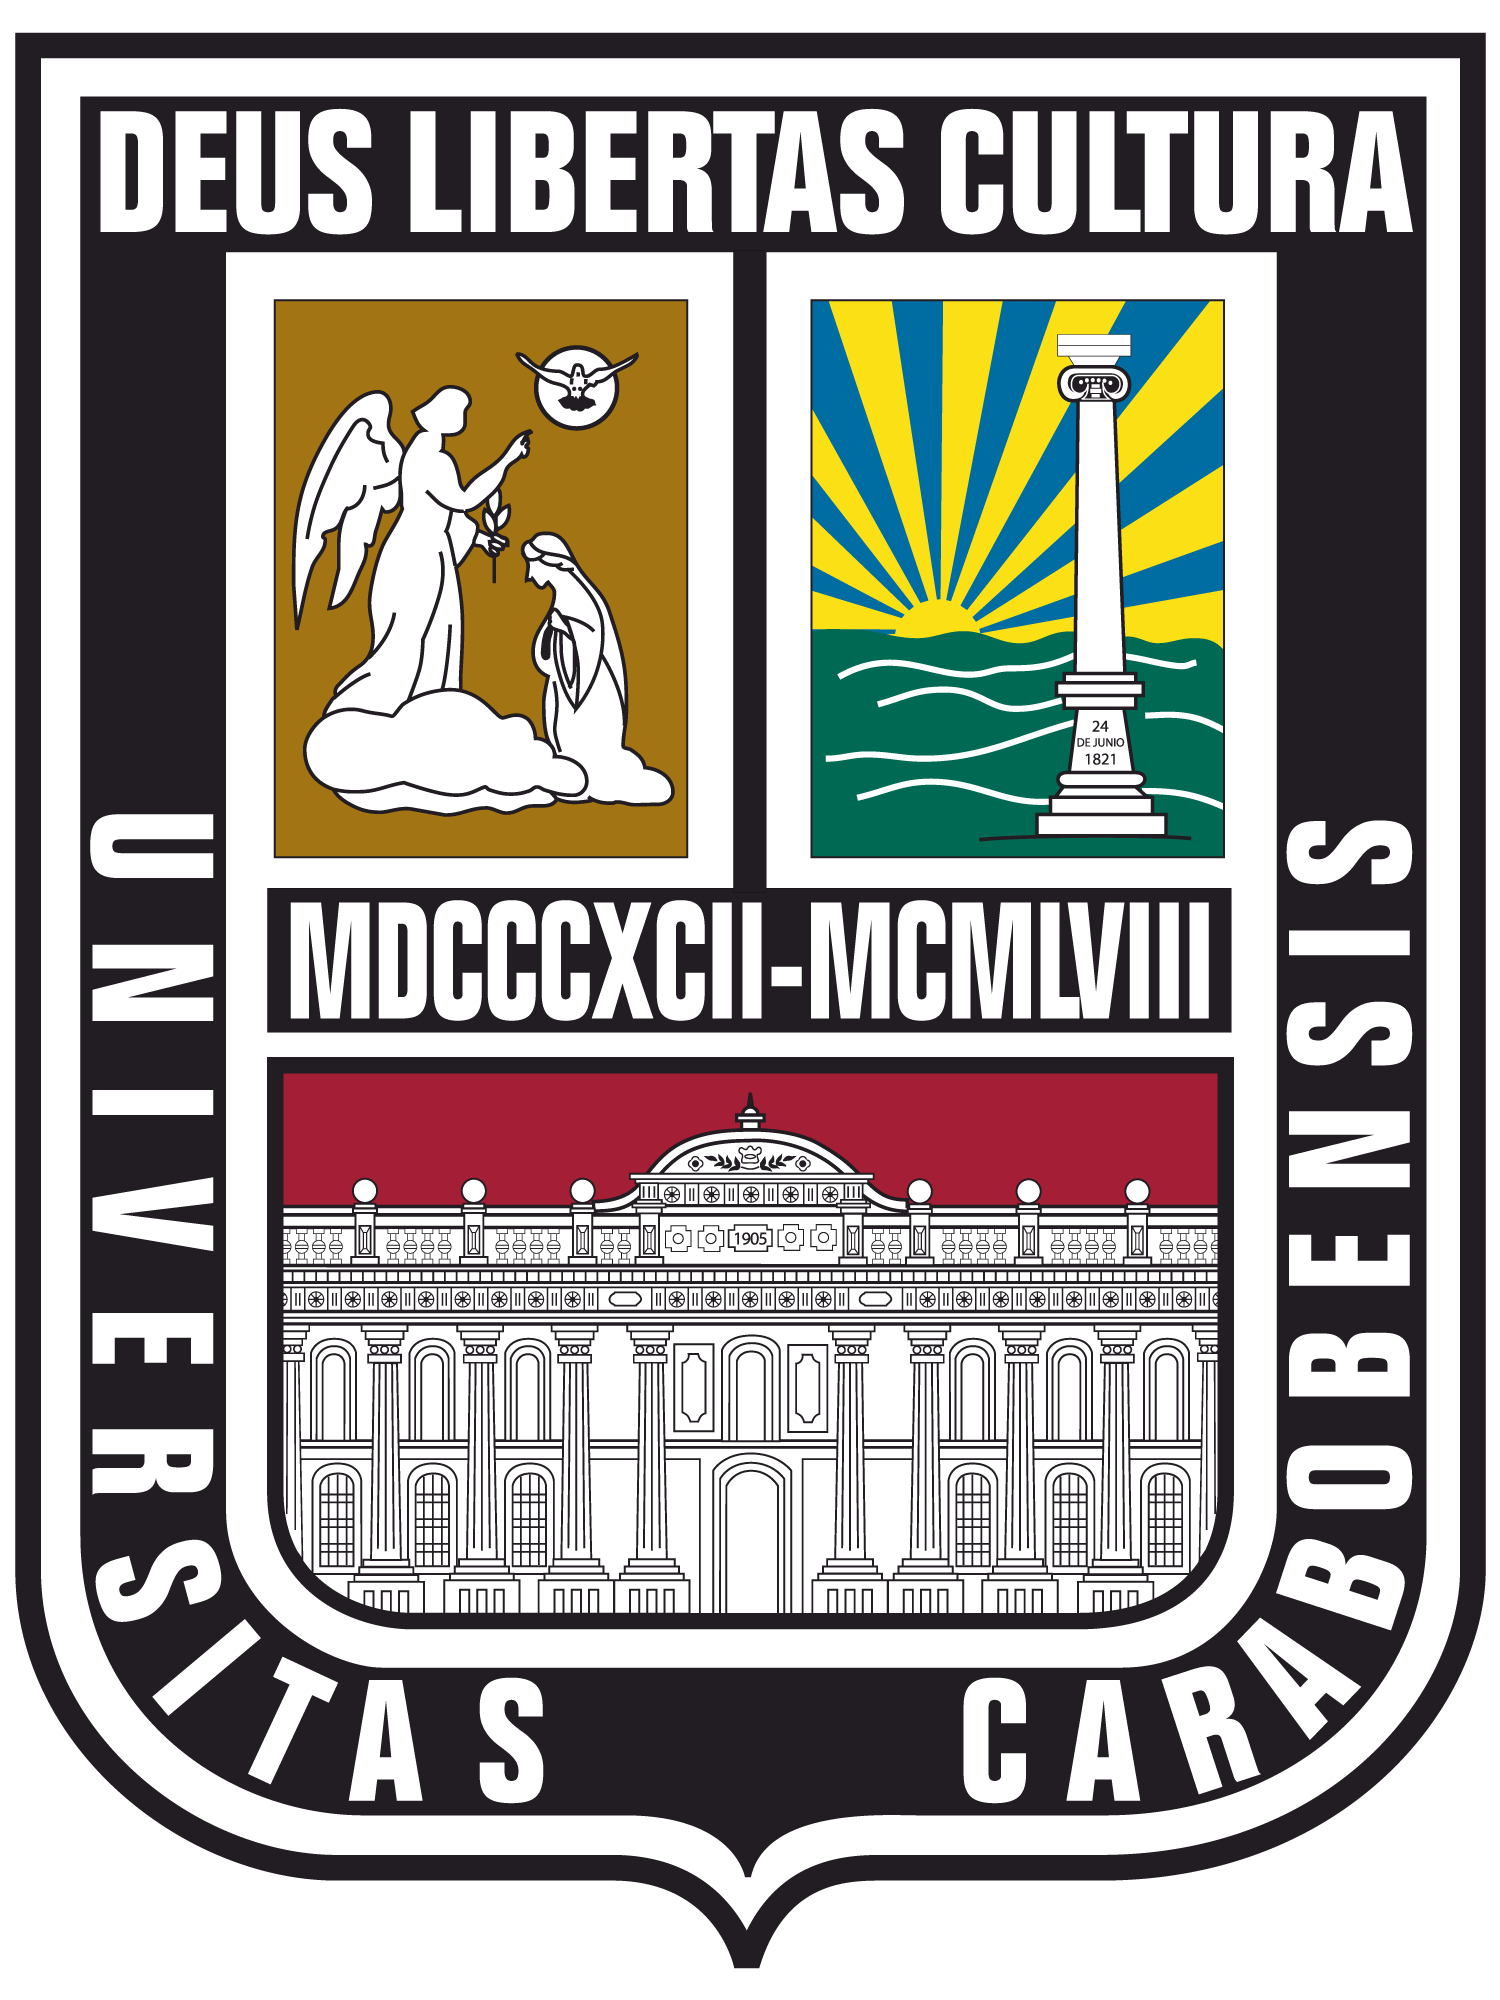 UC_logo